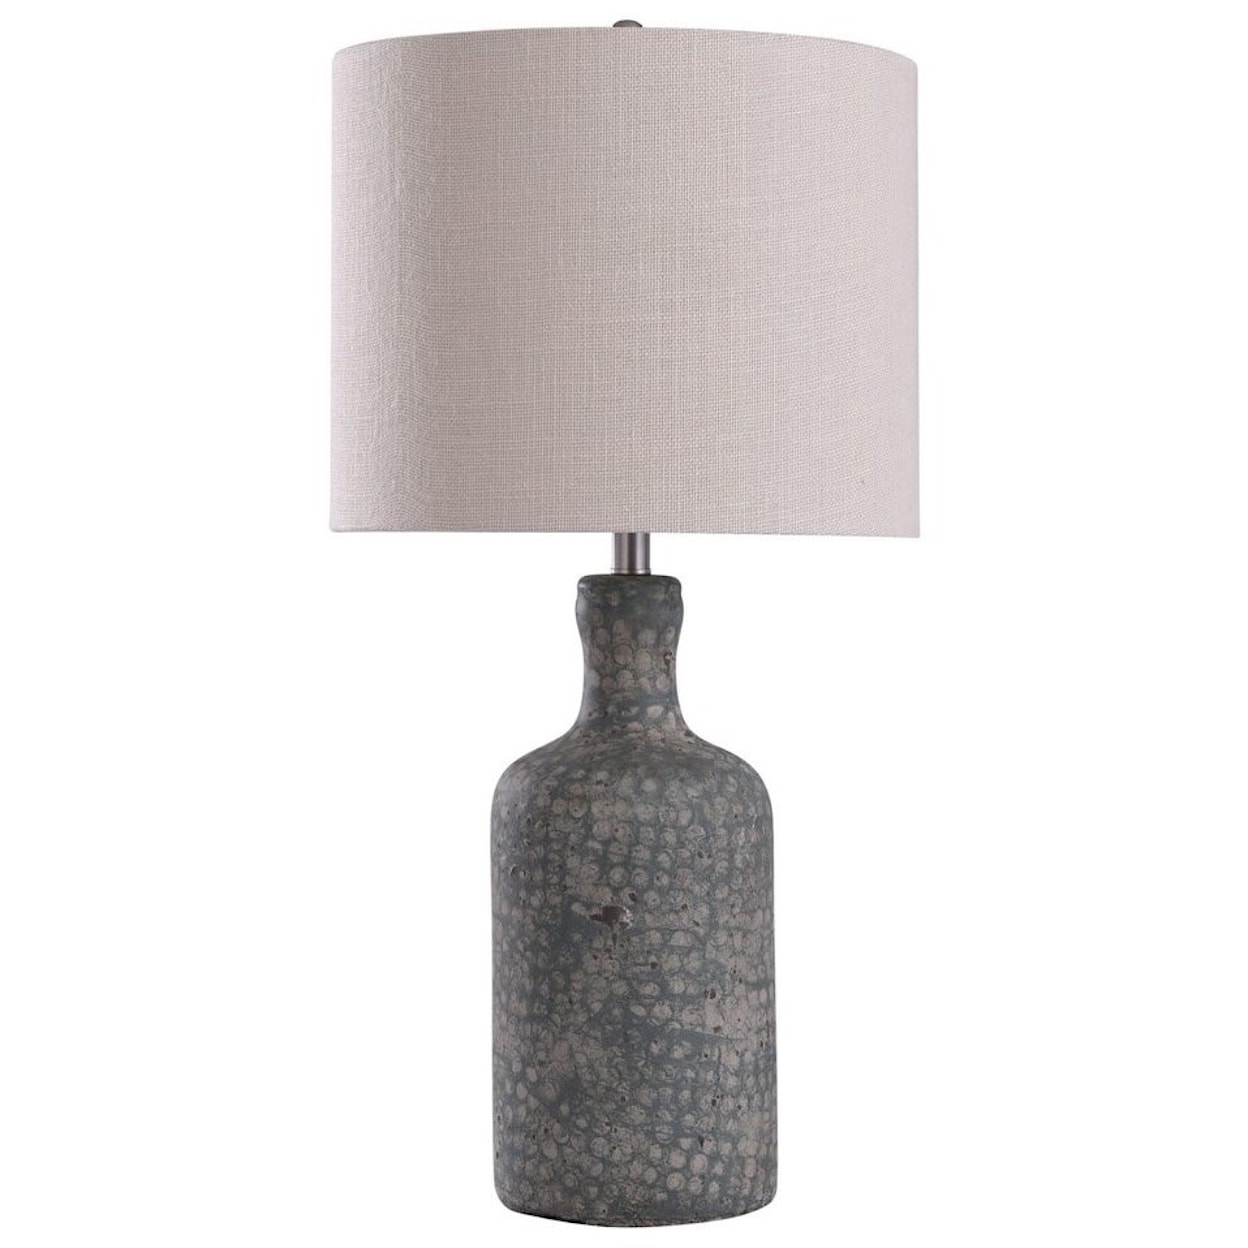 StyleCraft Lamps Norport Lamp